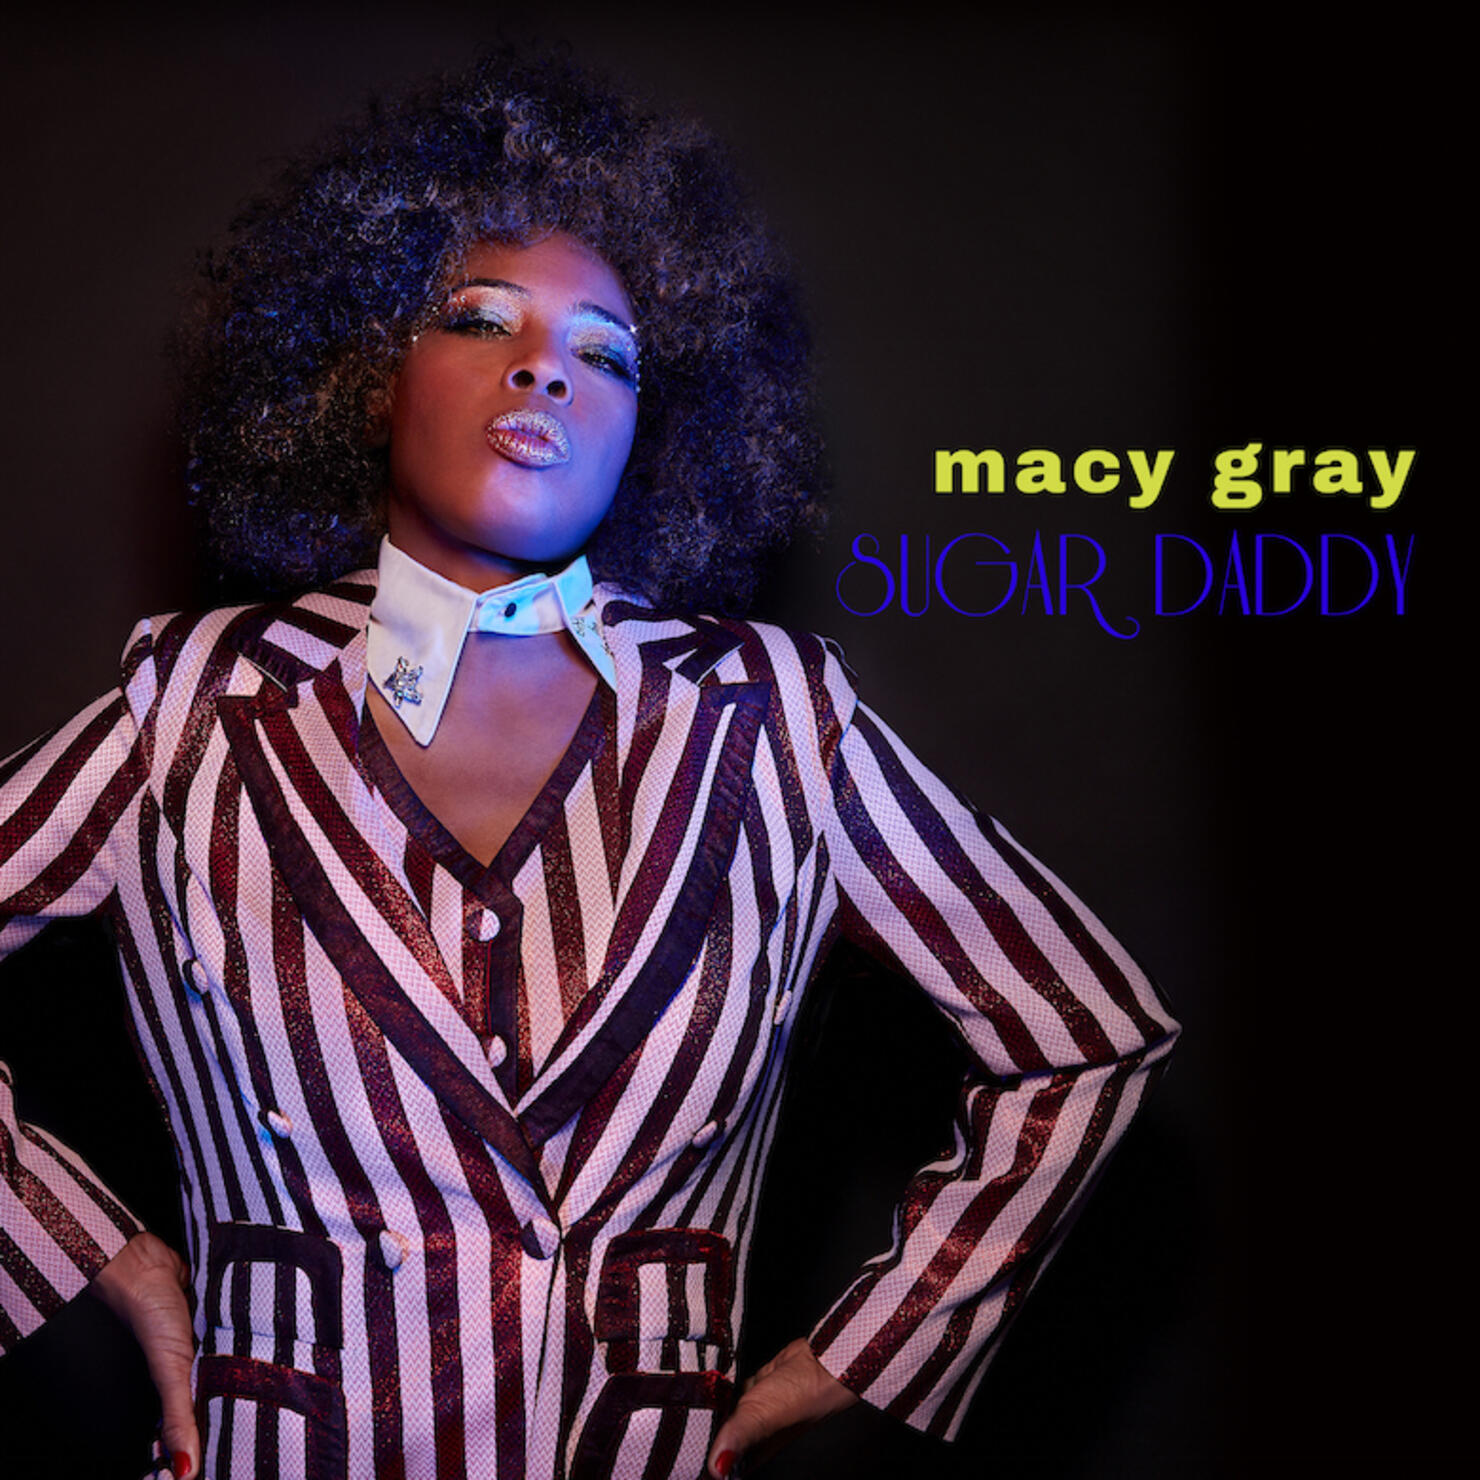 Macy Gray - "Sugar Daddy" Cover Art